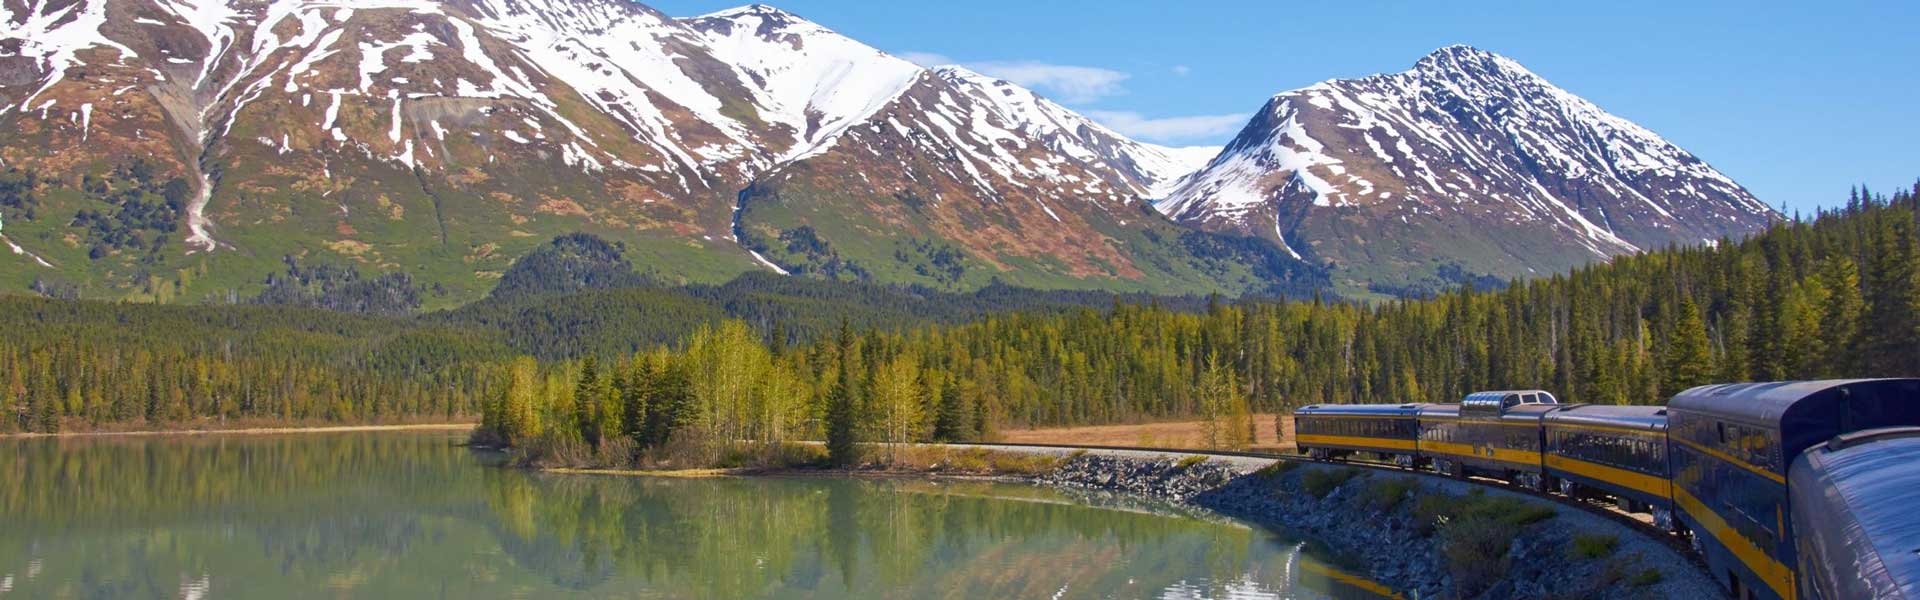 Alaska Rail Vacations